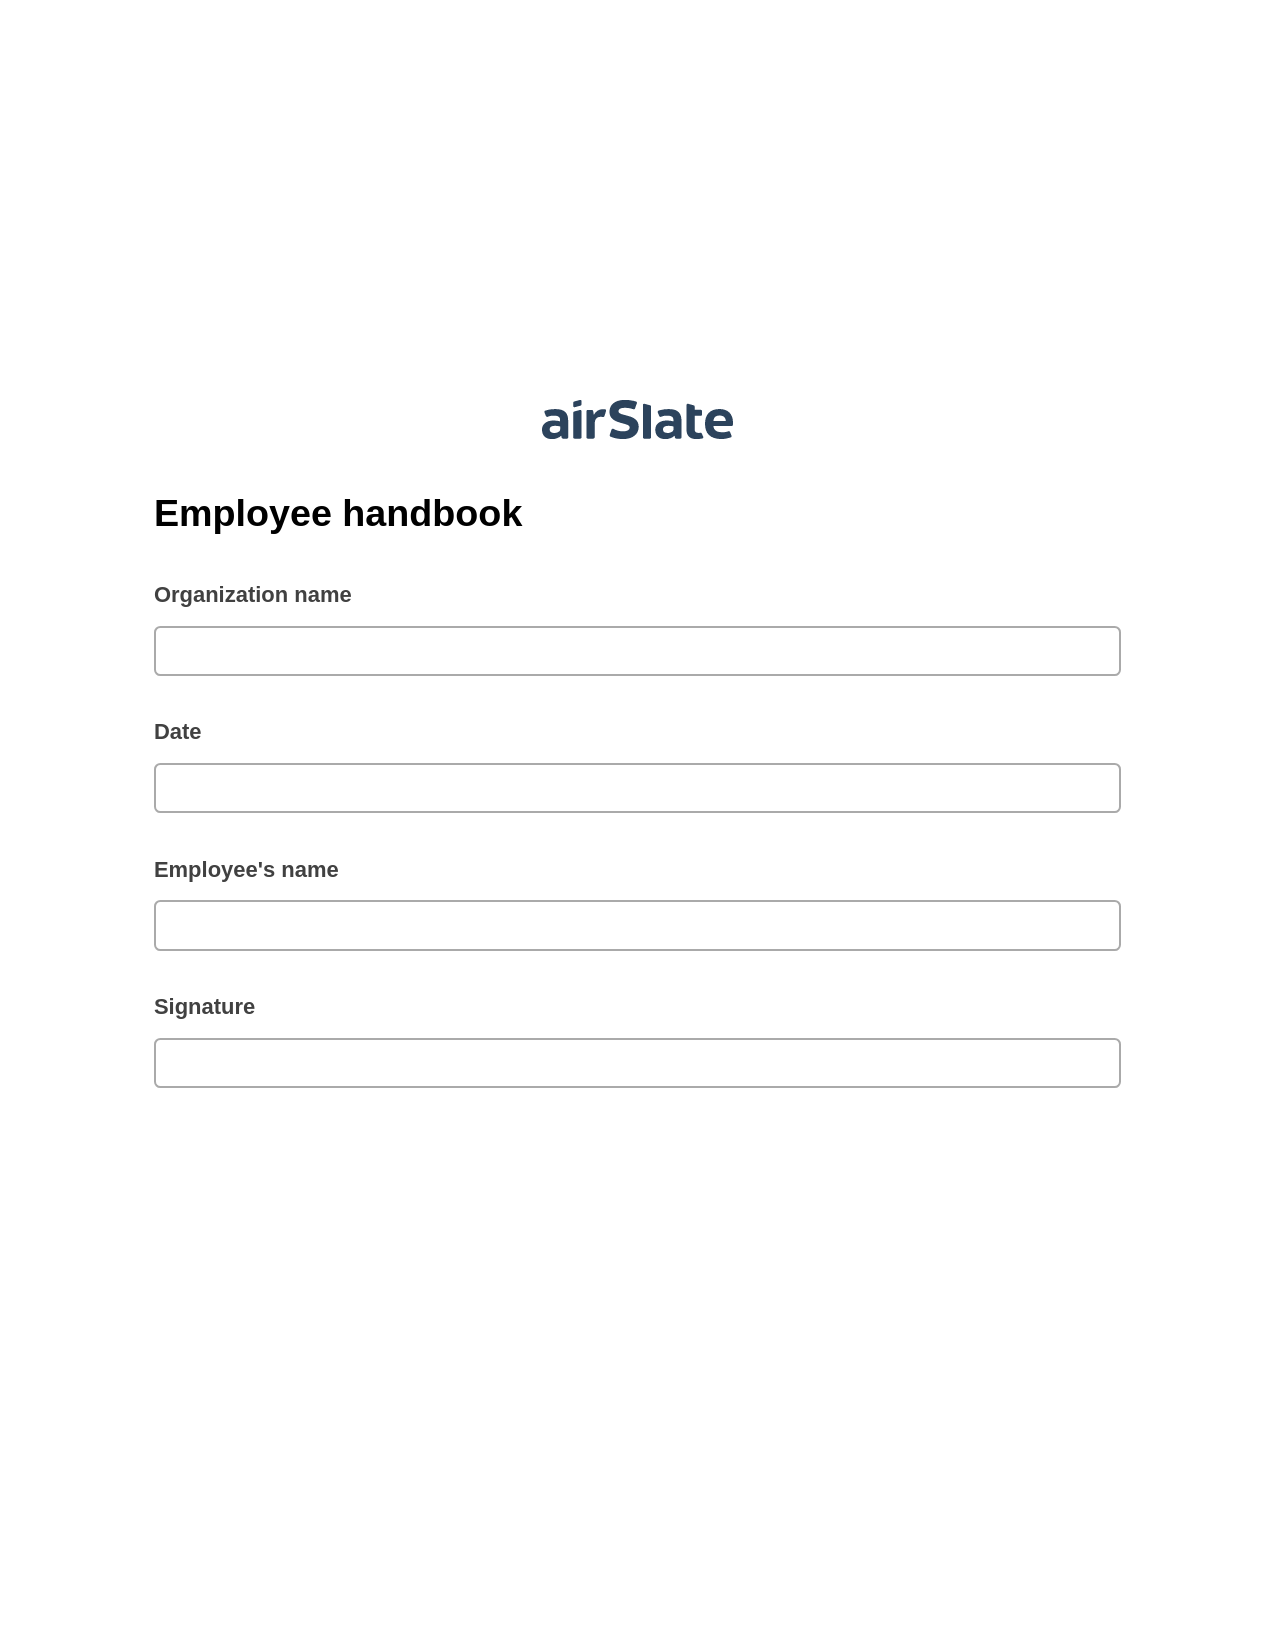 Multirole Employee handbook Pre-fill from Salesforce Record Bot, Audit Trail Bot, Export to Google Sheet Bot